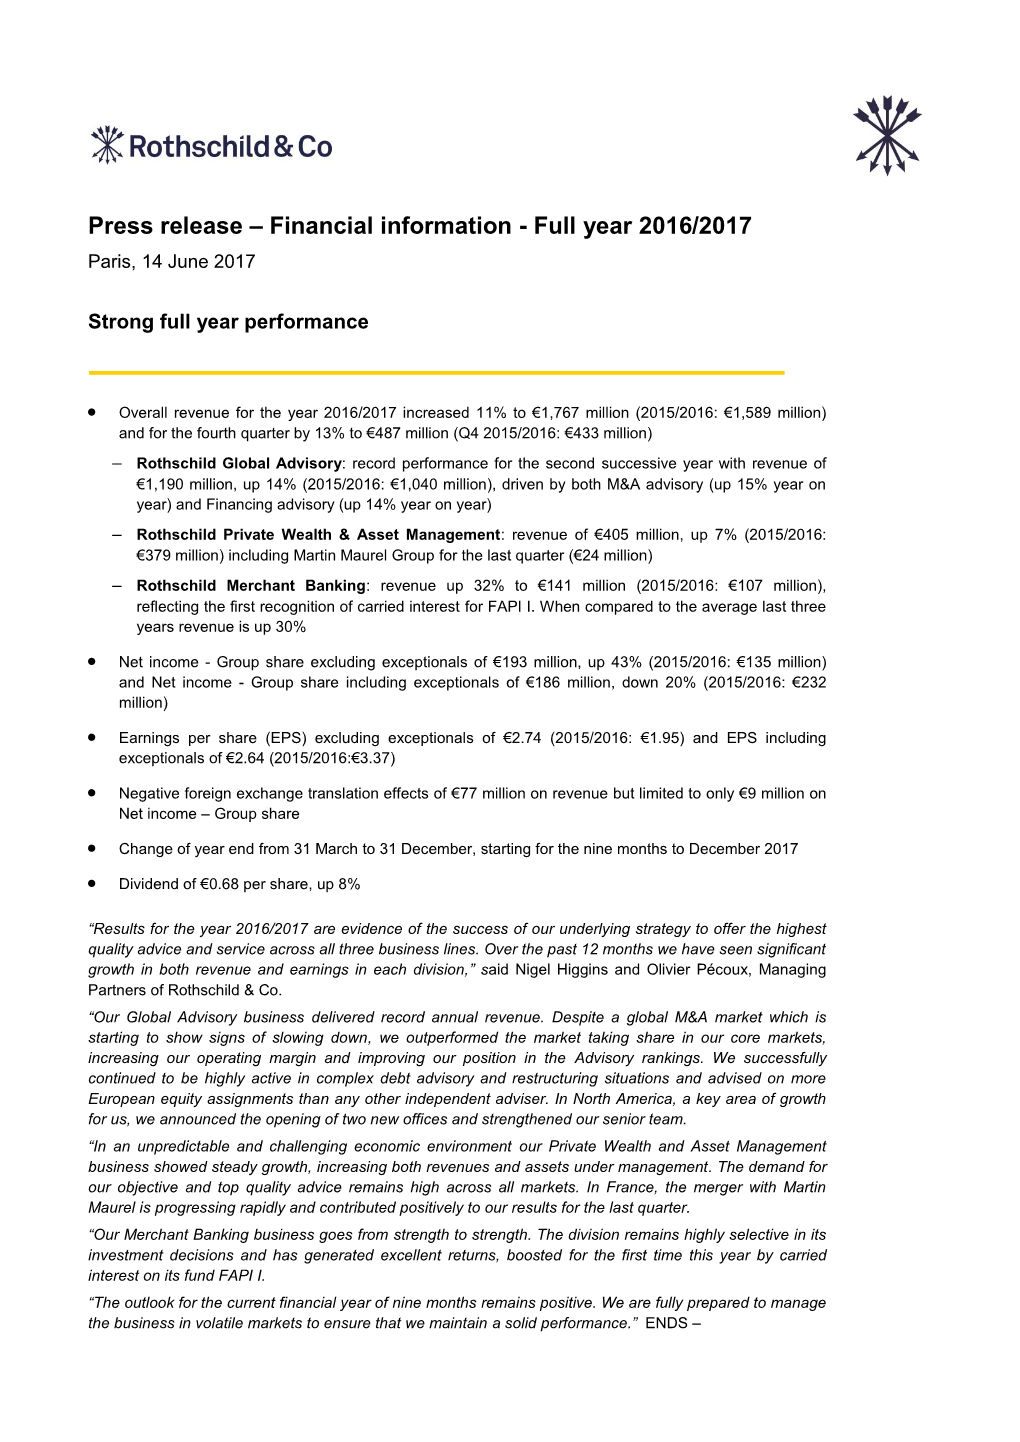 Press Release – Financial Information - Full Year 2016/2017 Paris, 14 June 2017